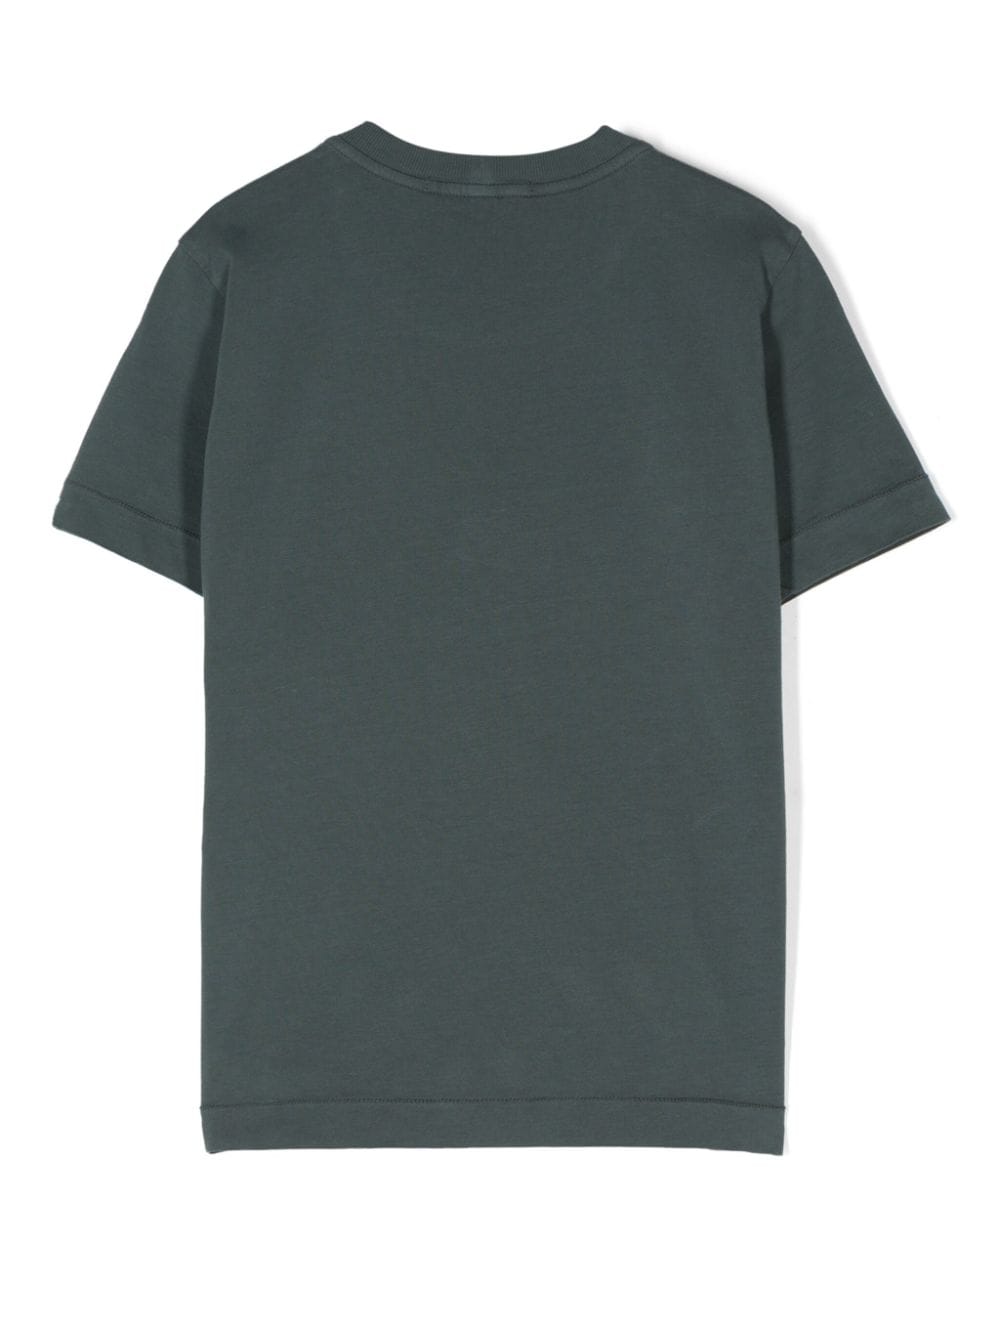 Green cotton t-shirt for boys